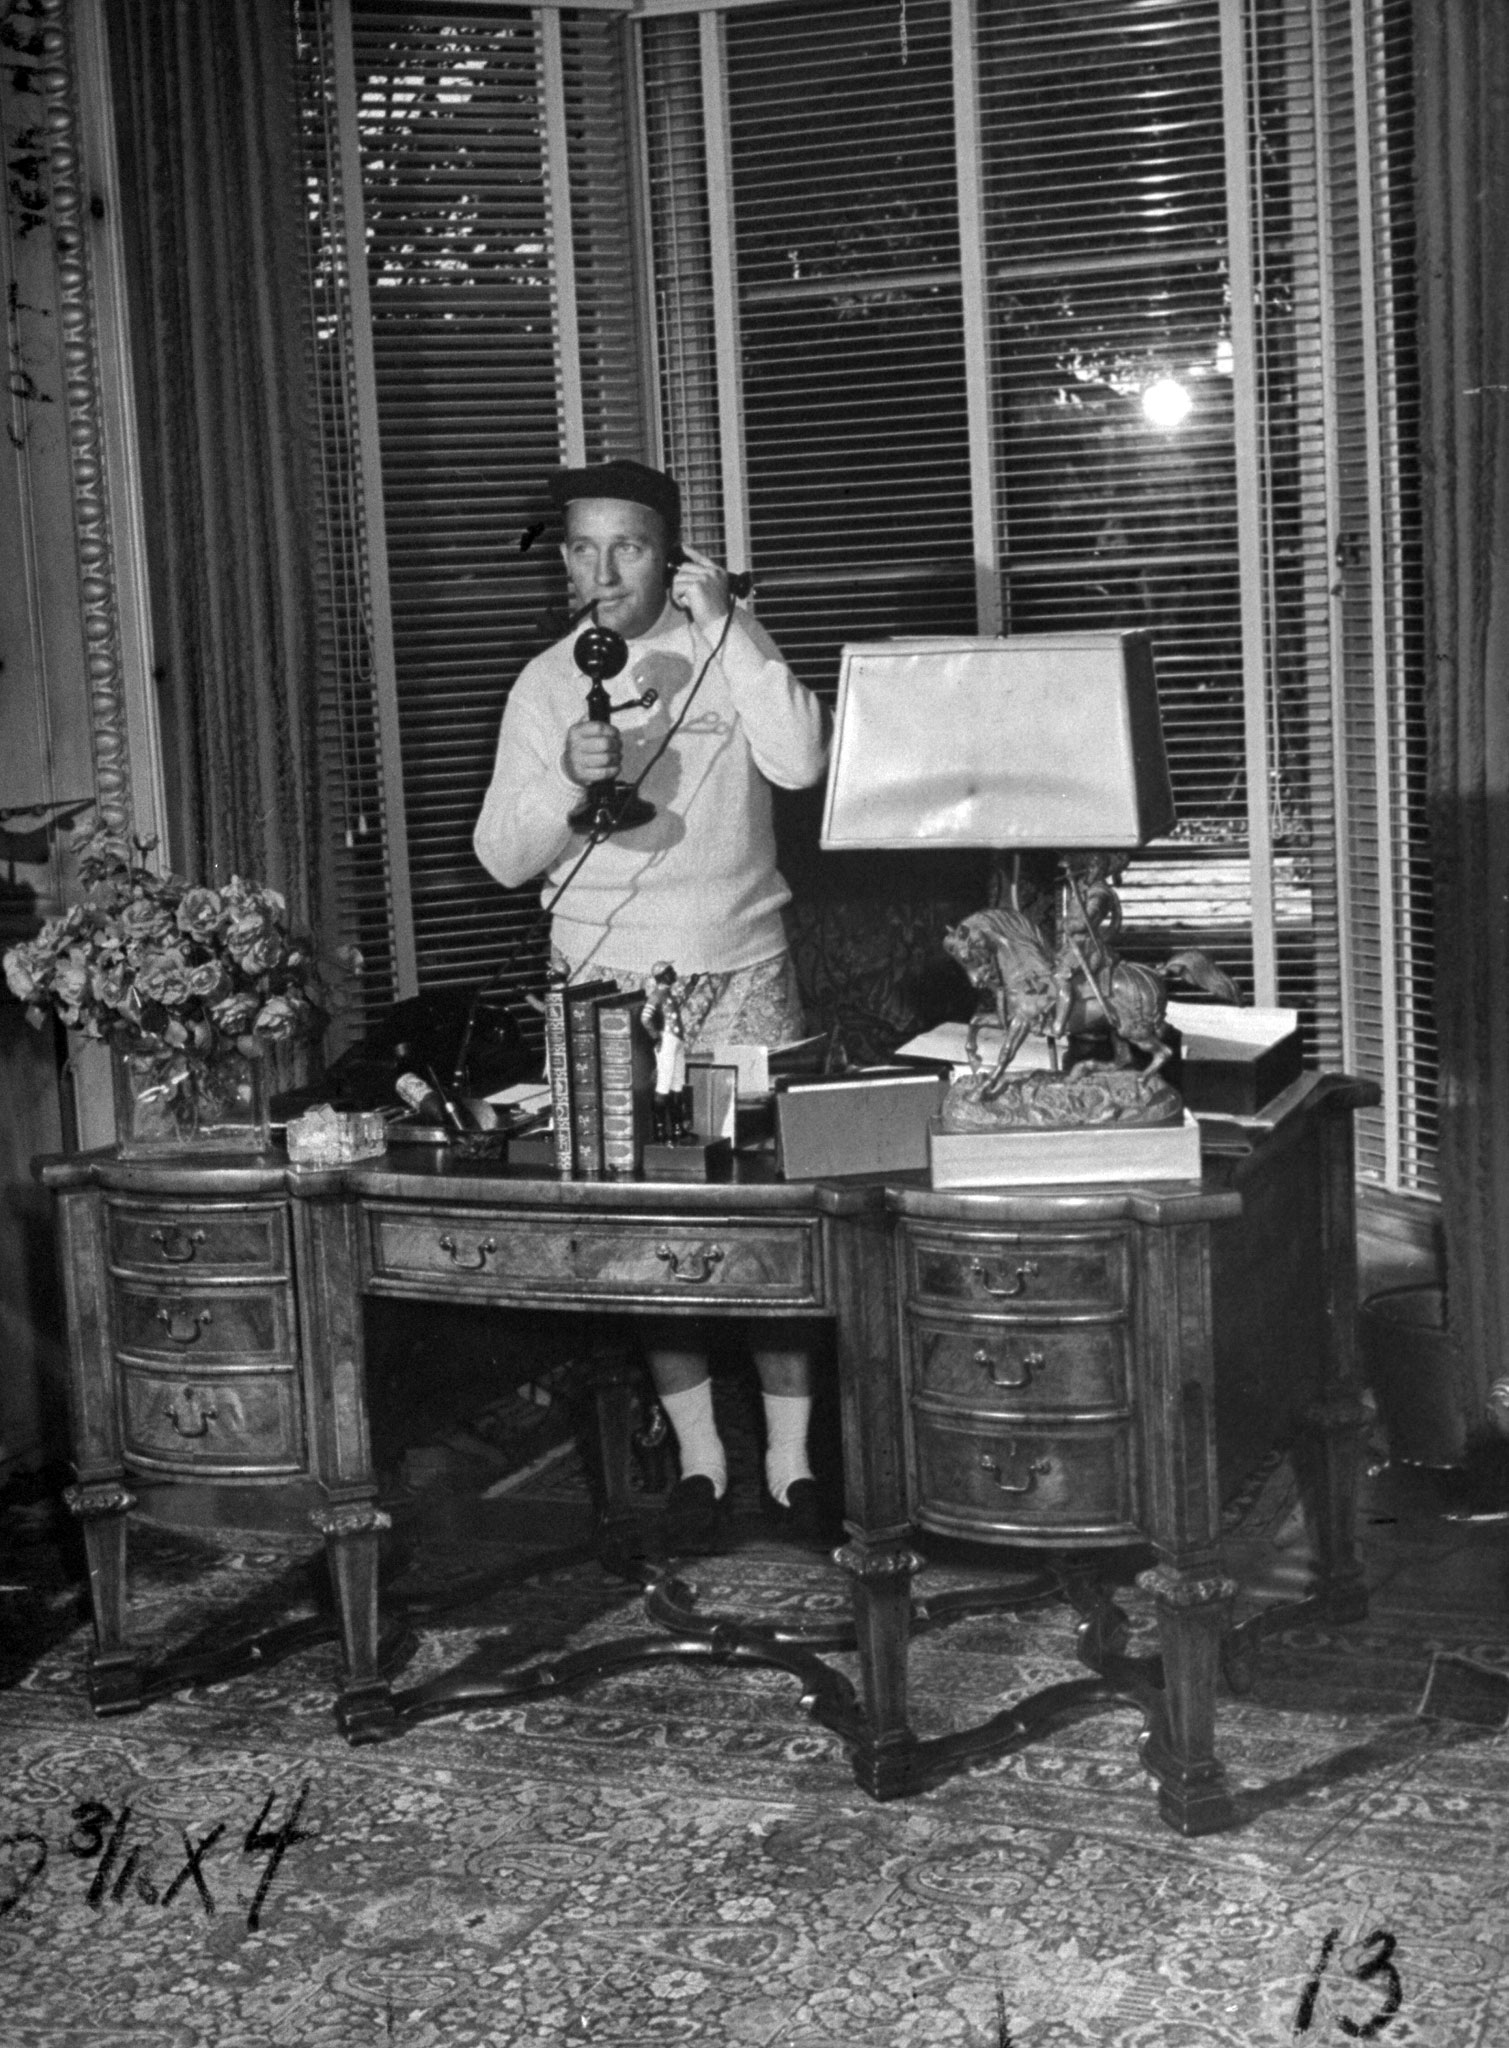 Bing Crosby on the phone, 1944.